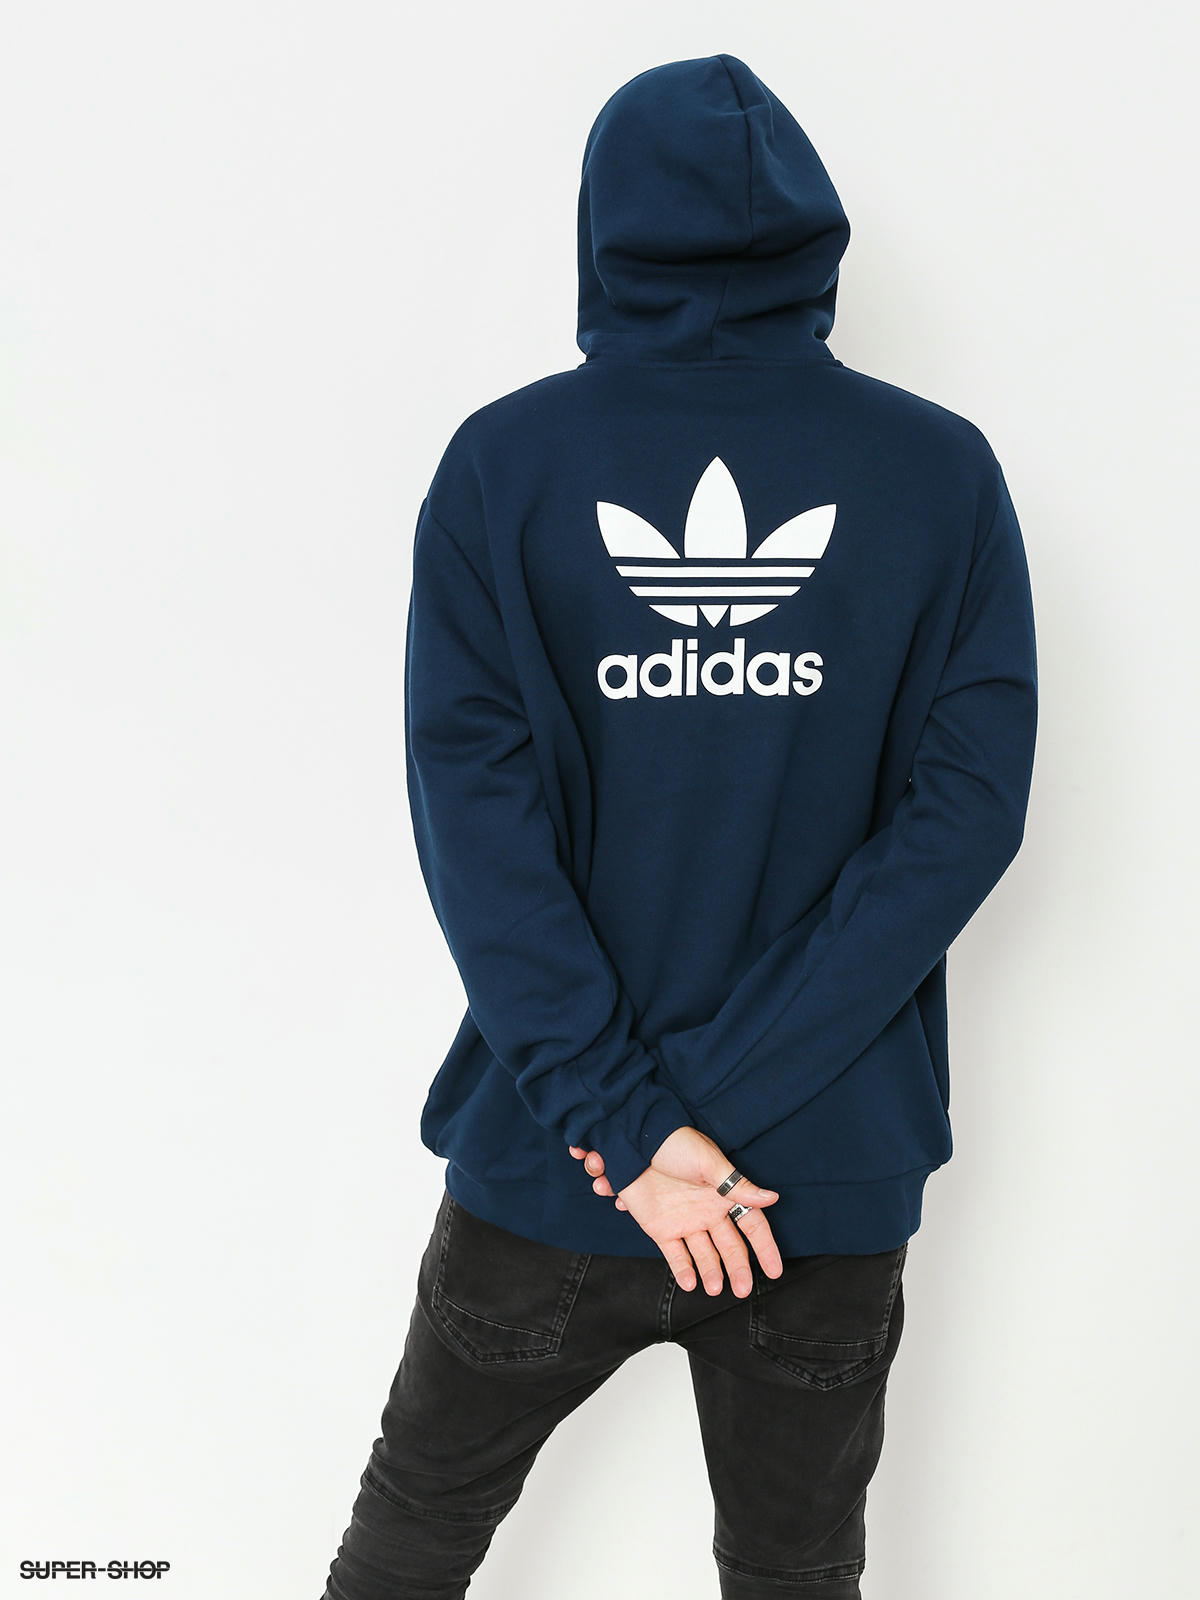 adidas trf flc hoodie